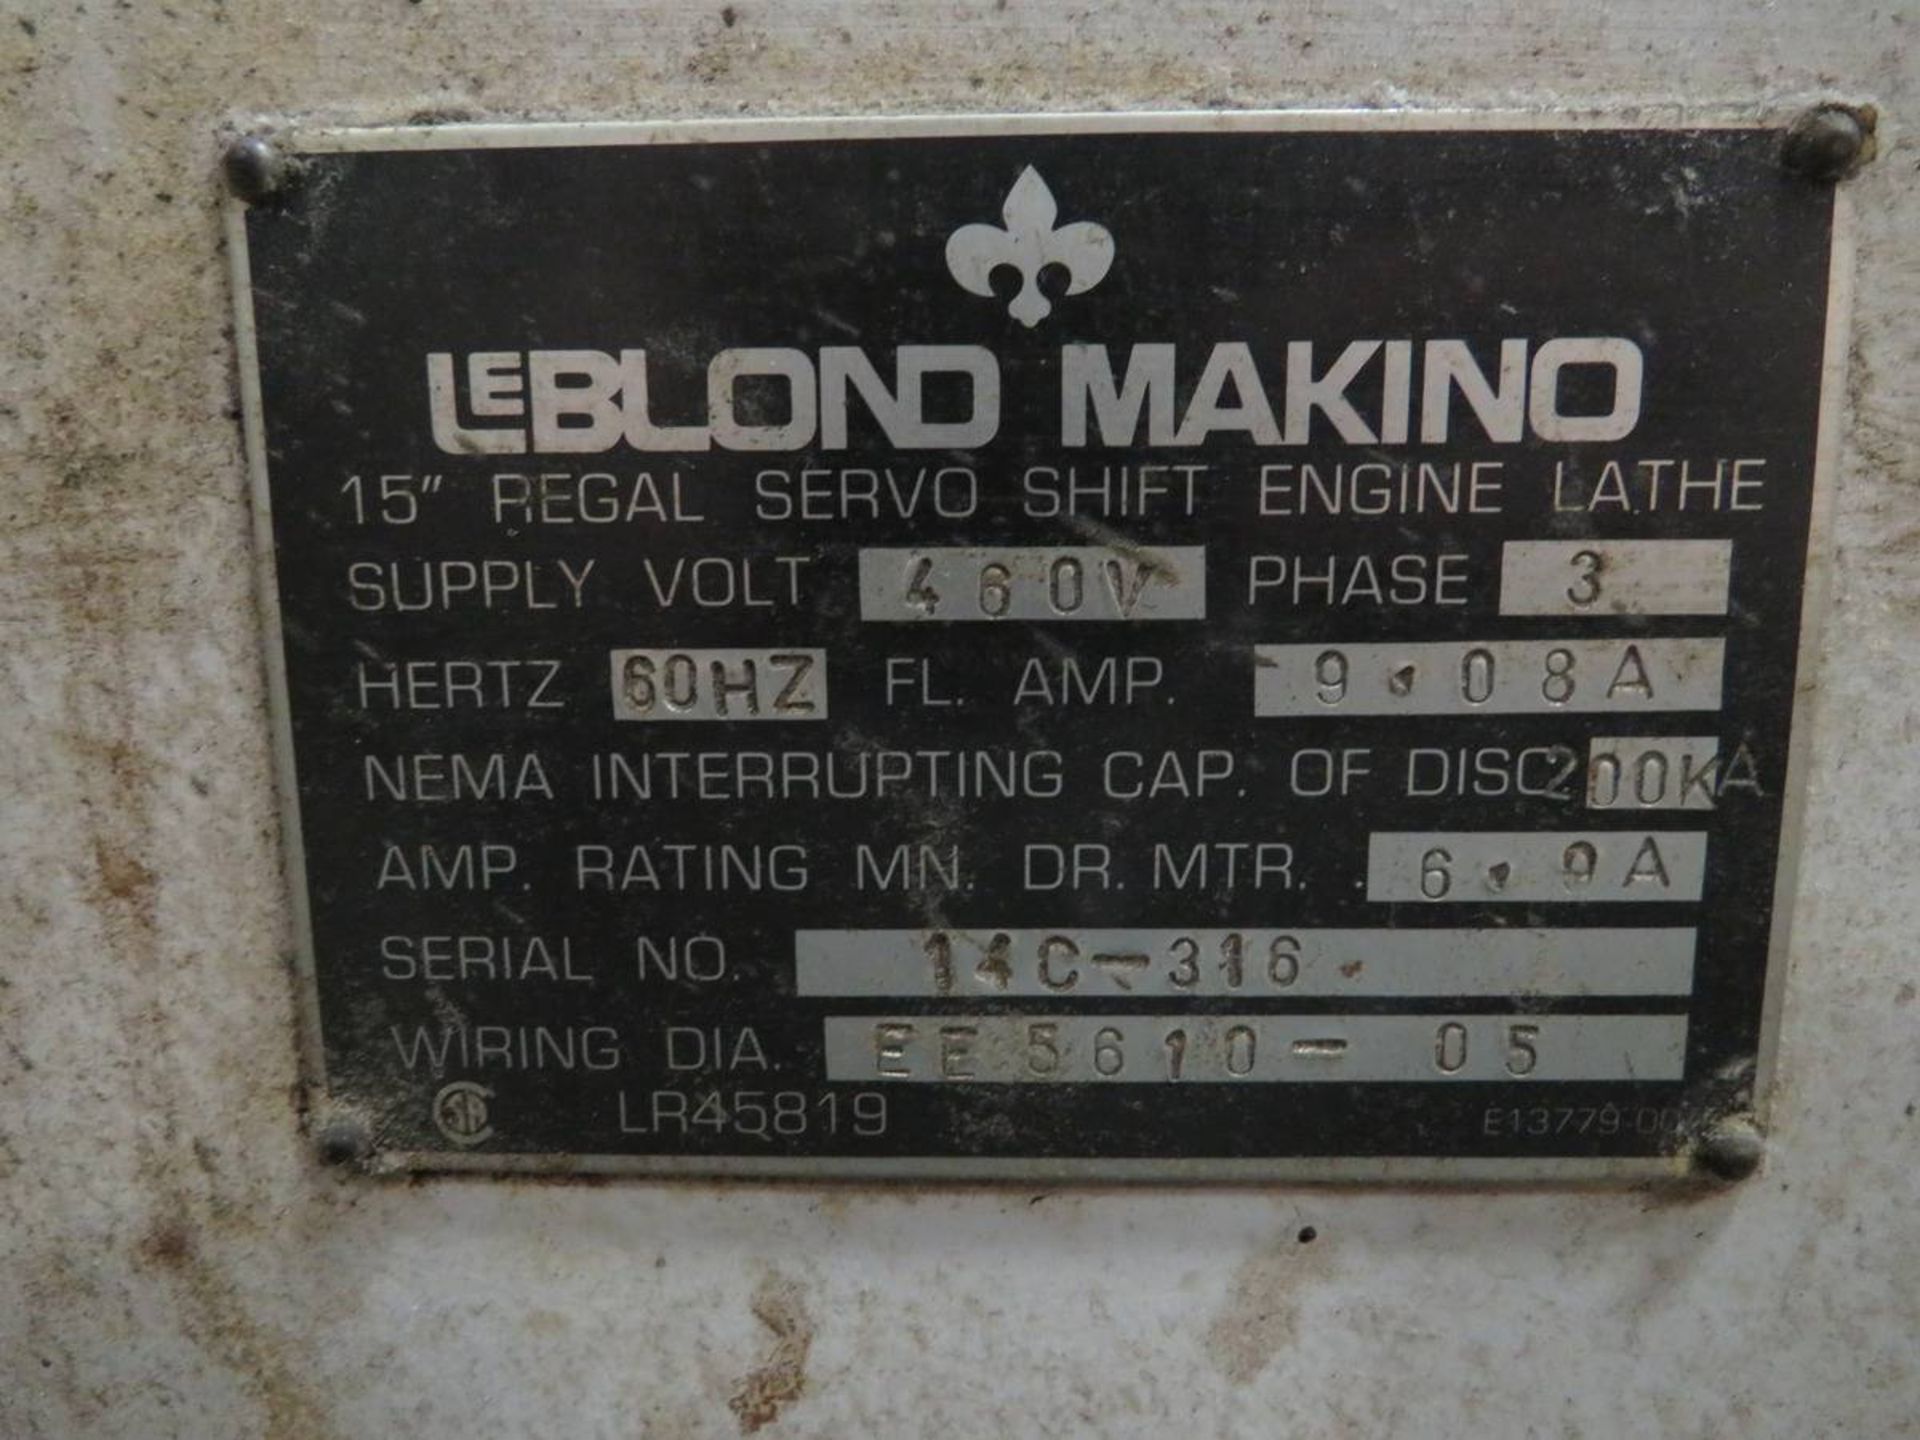 LeBlonde Makino 15" Regal Servo Shift Engine Lathe - Image 10 of 12